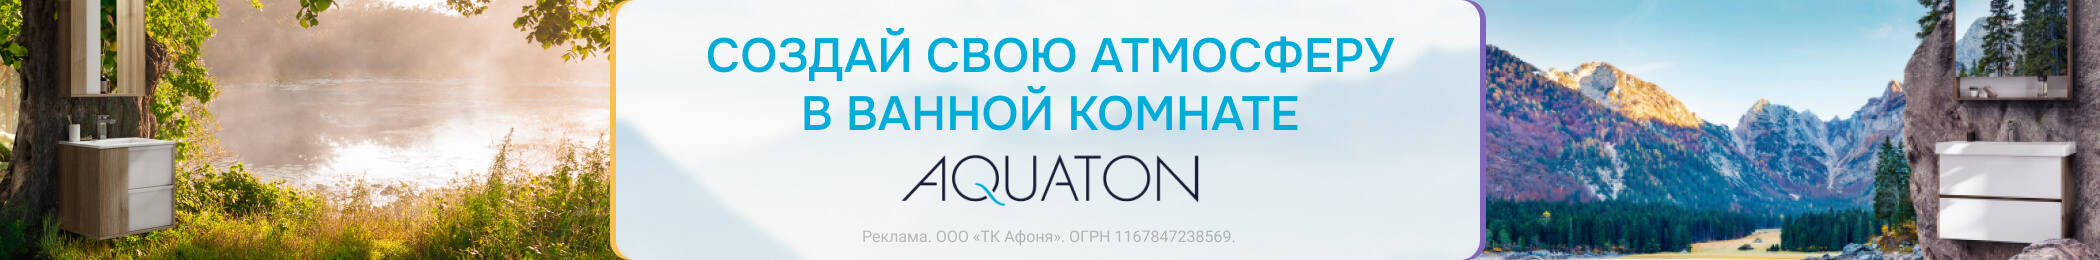  Aquaton  